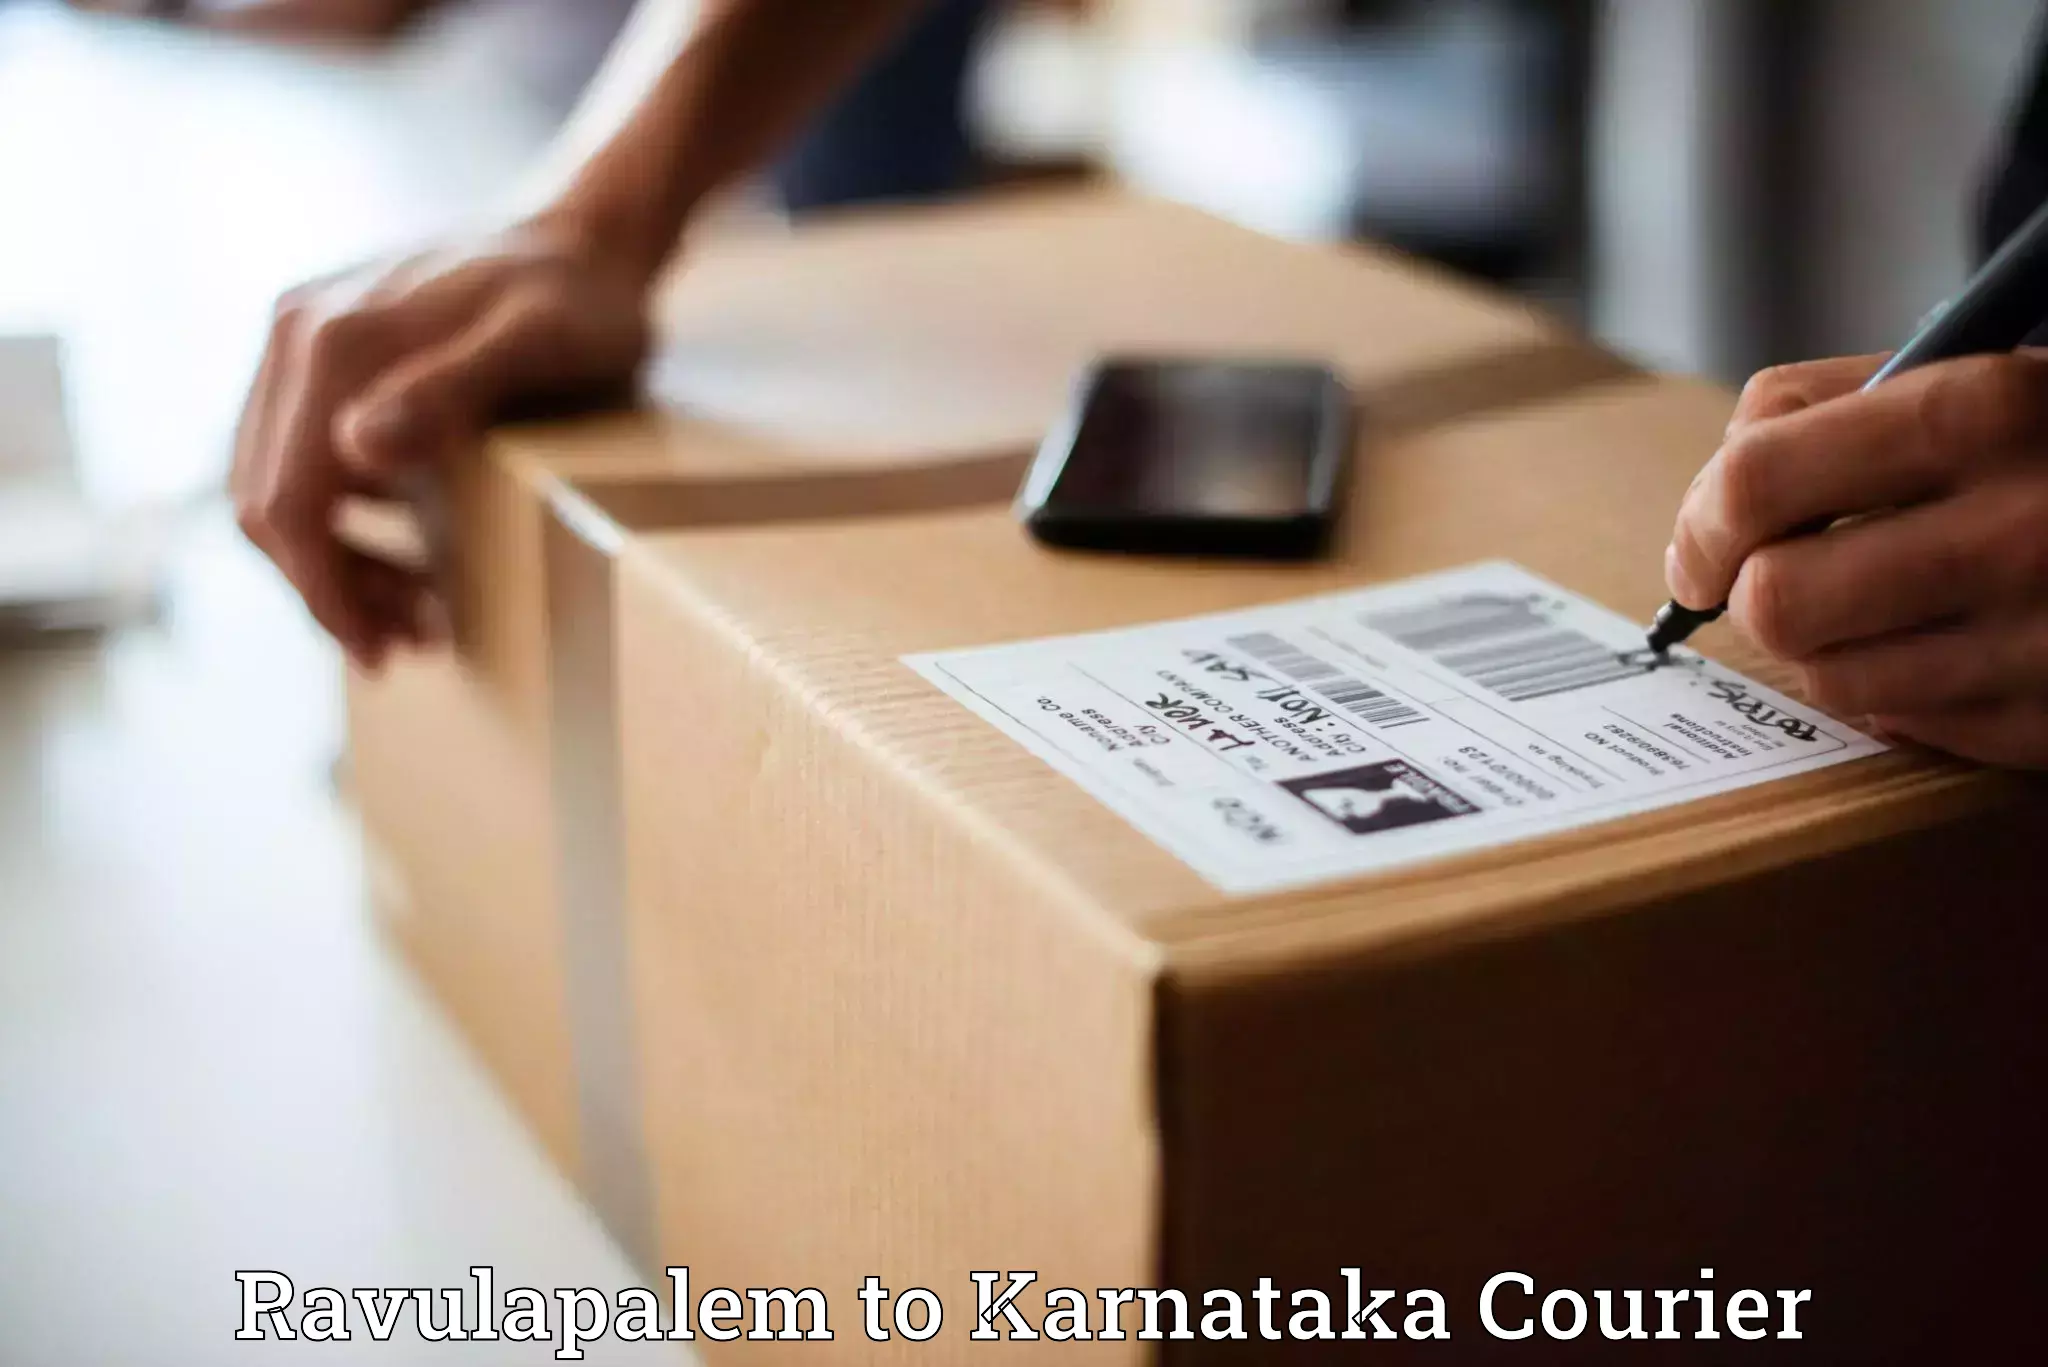 Efficient parcel service Ravulapalem to Karnataka